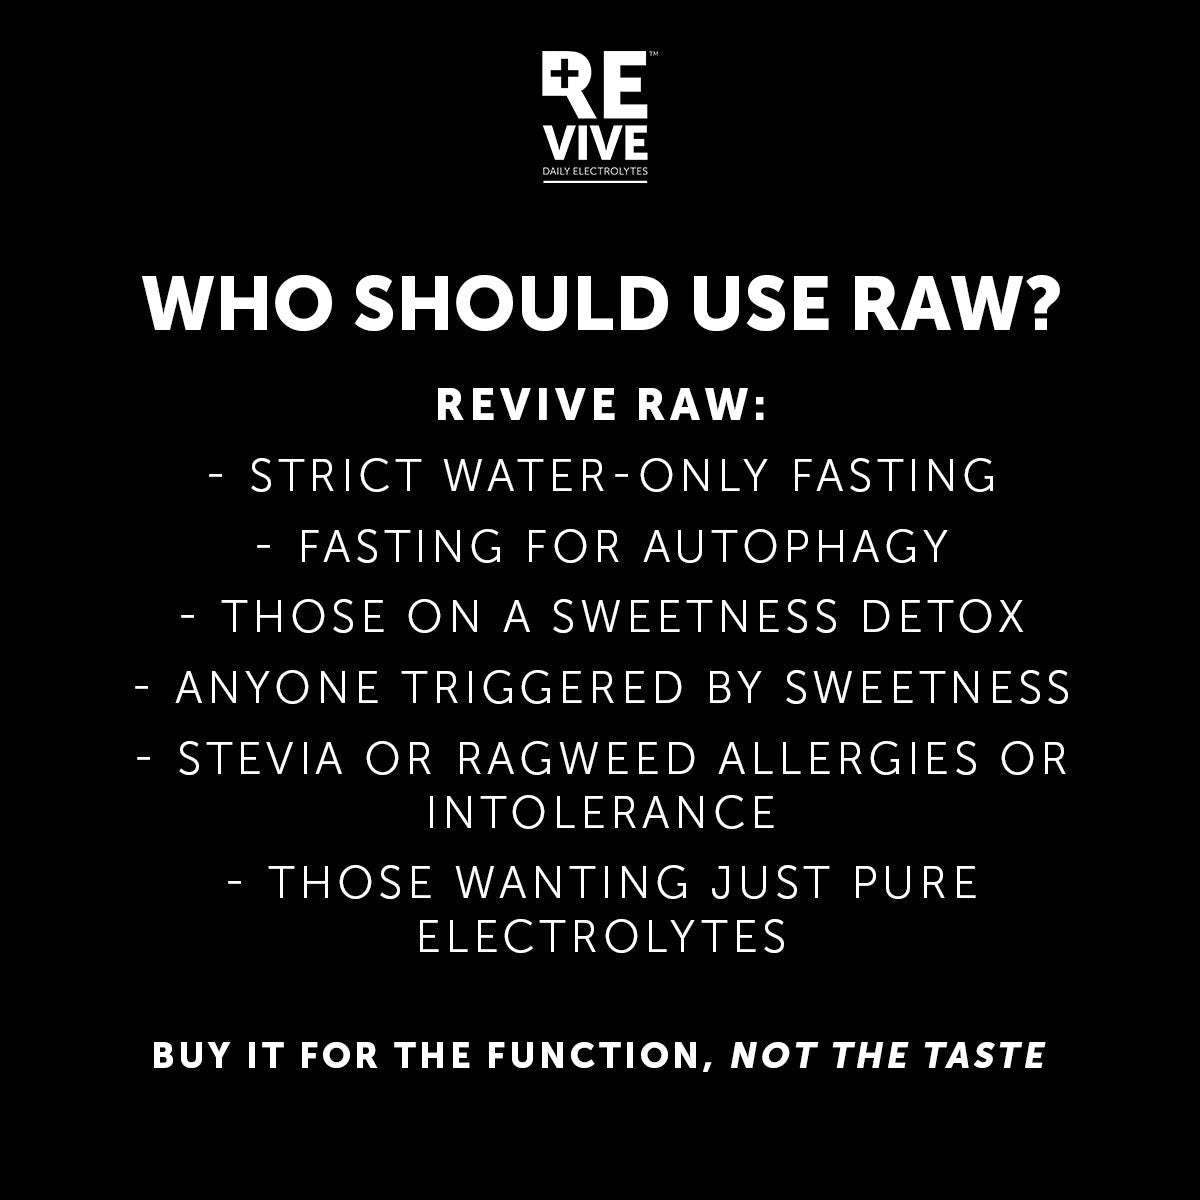 RAW - Daily Electrolytes